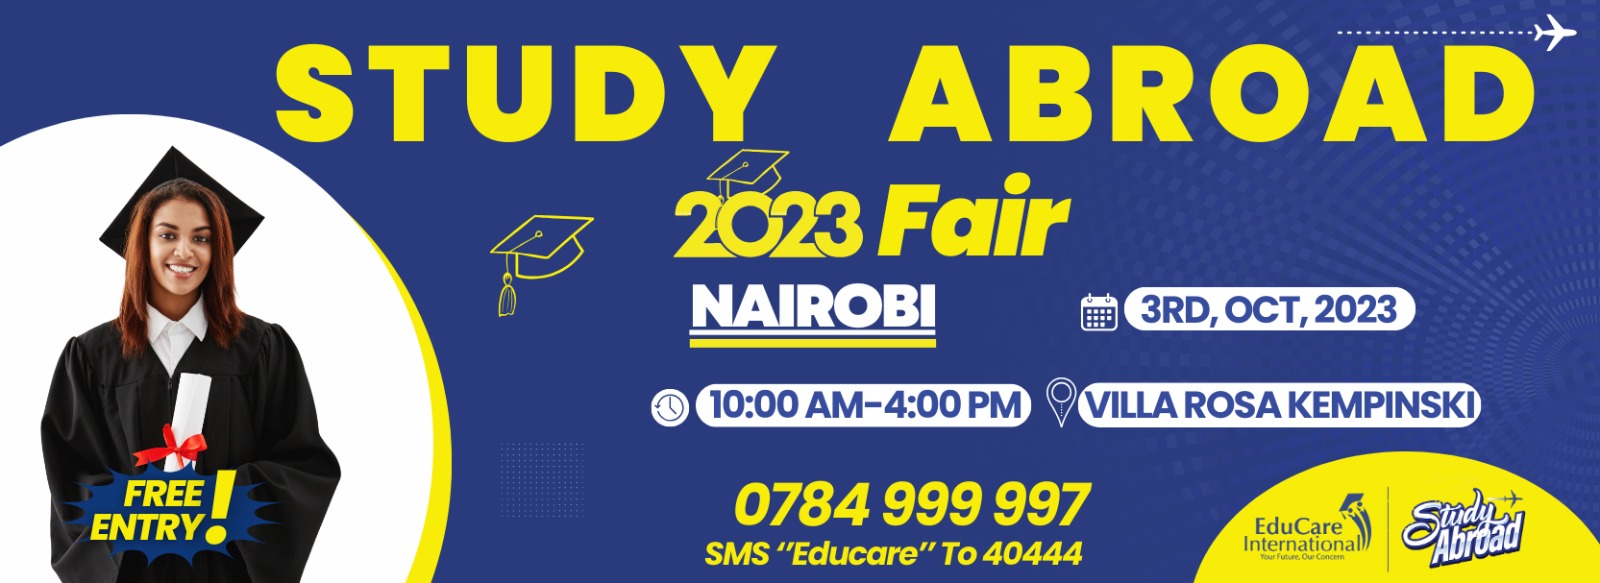 EXPLORE YOUR ACADEMIC FUTURE AT THE EDUCARE INTERNATIONAL EDUCATIONAL FAIR IN NAIROBI!